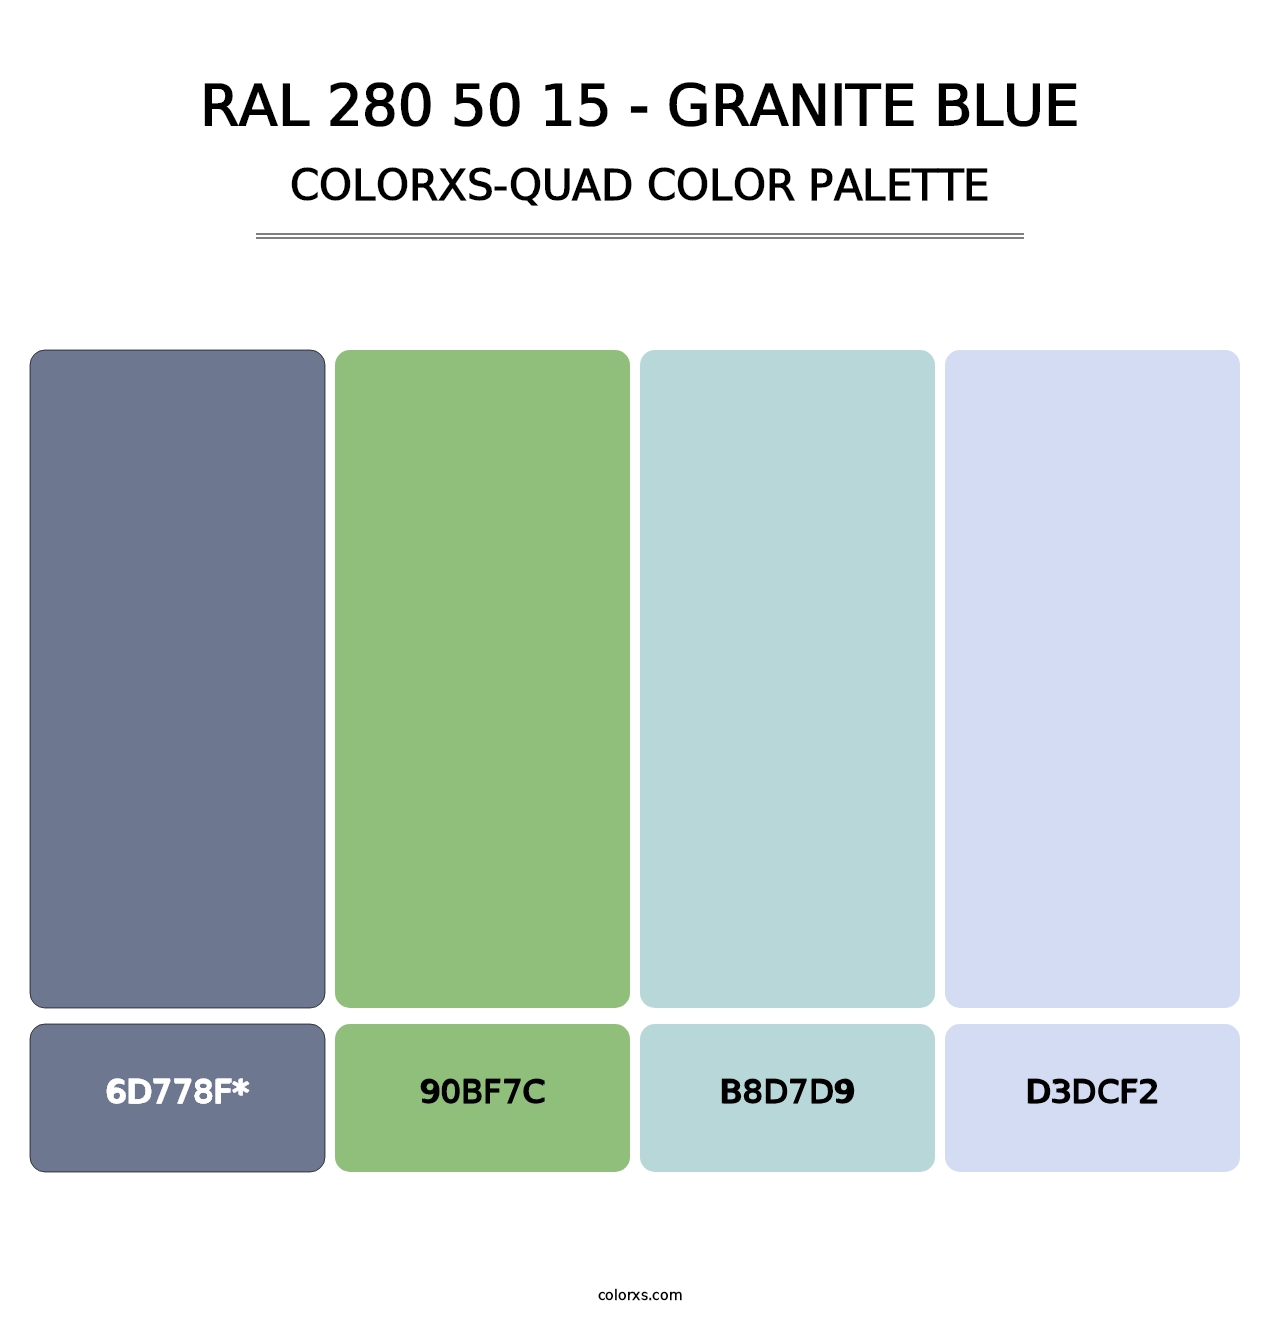 RAL 280 50 15 - Granite Blue - Colorxs Quad Palette